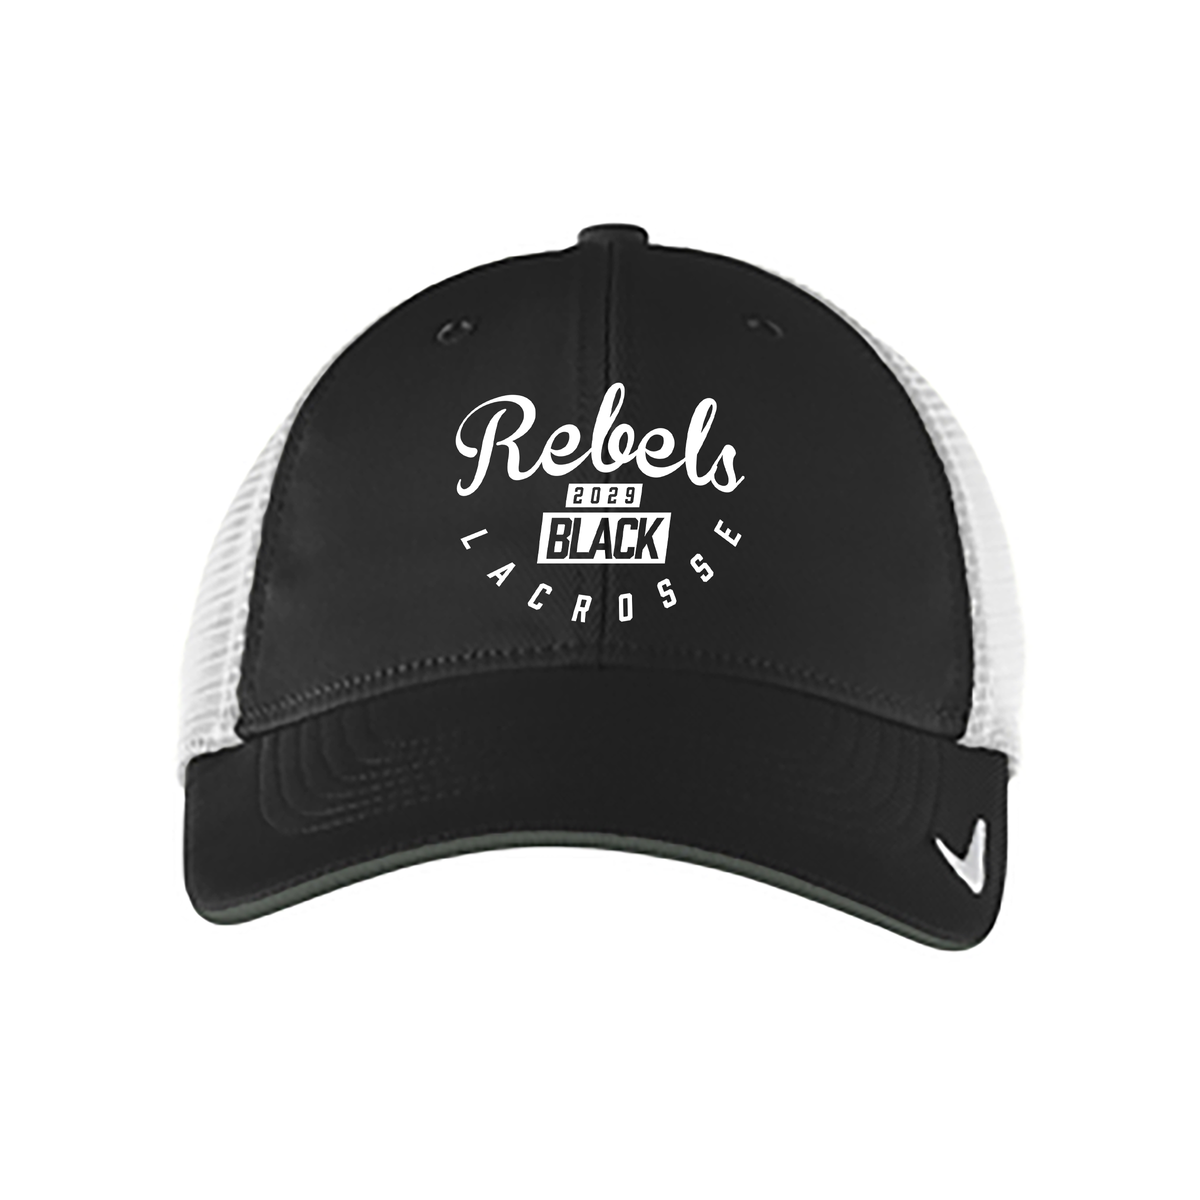 Rebels 2029 Black Nike Stretch-to-Fit Mesh Back Cap